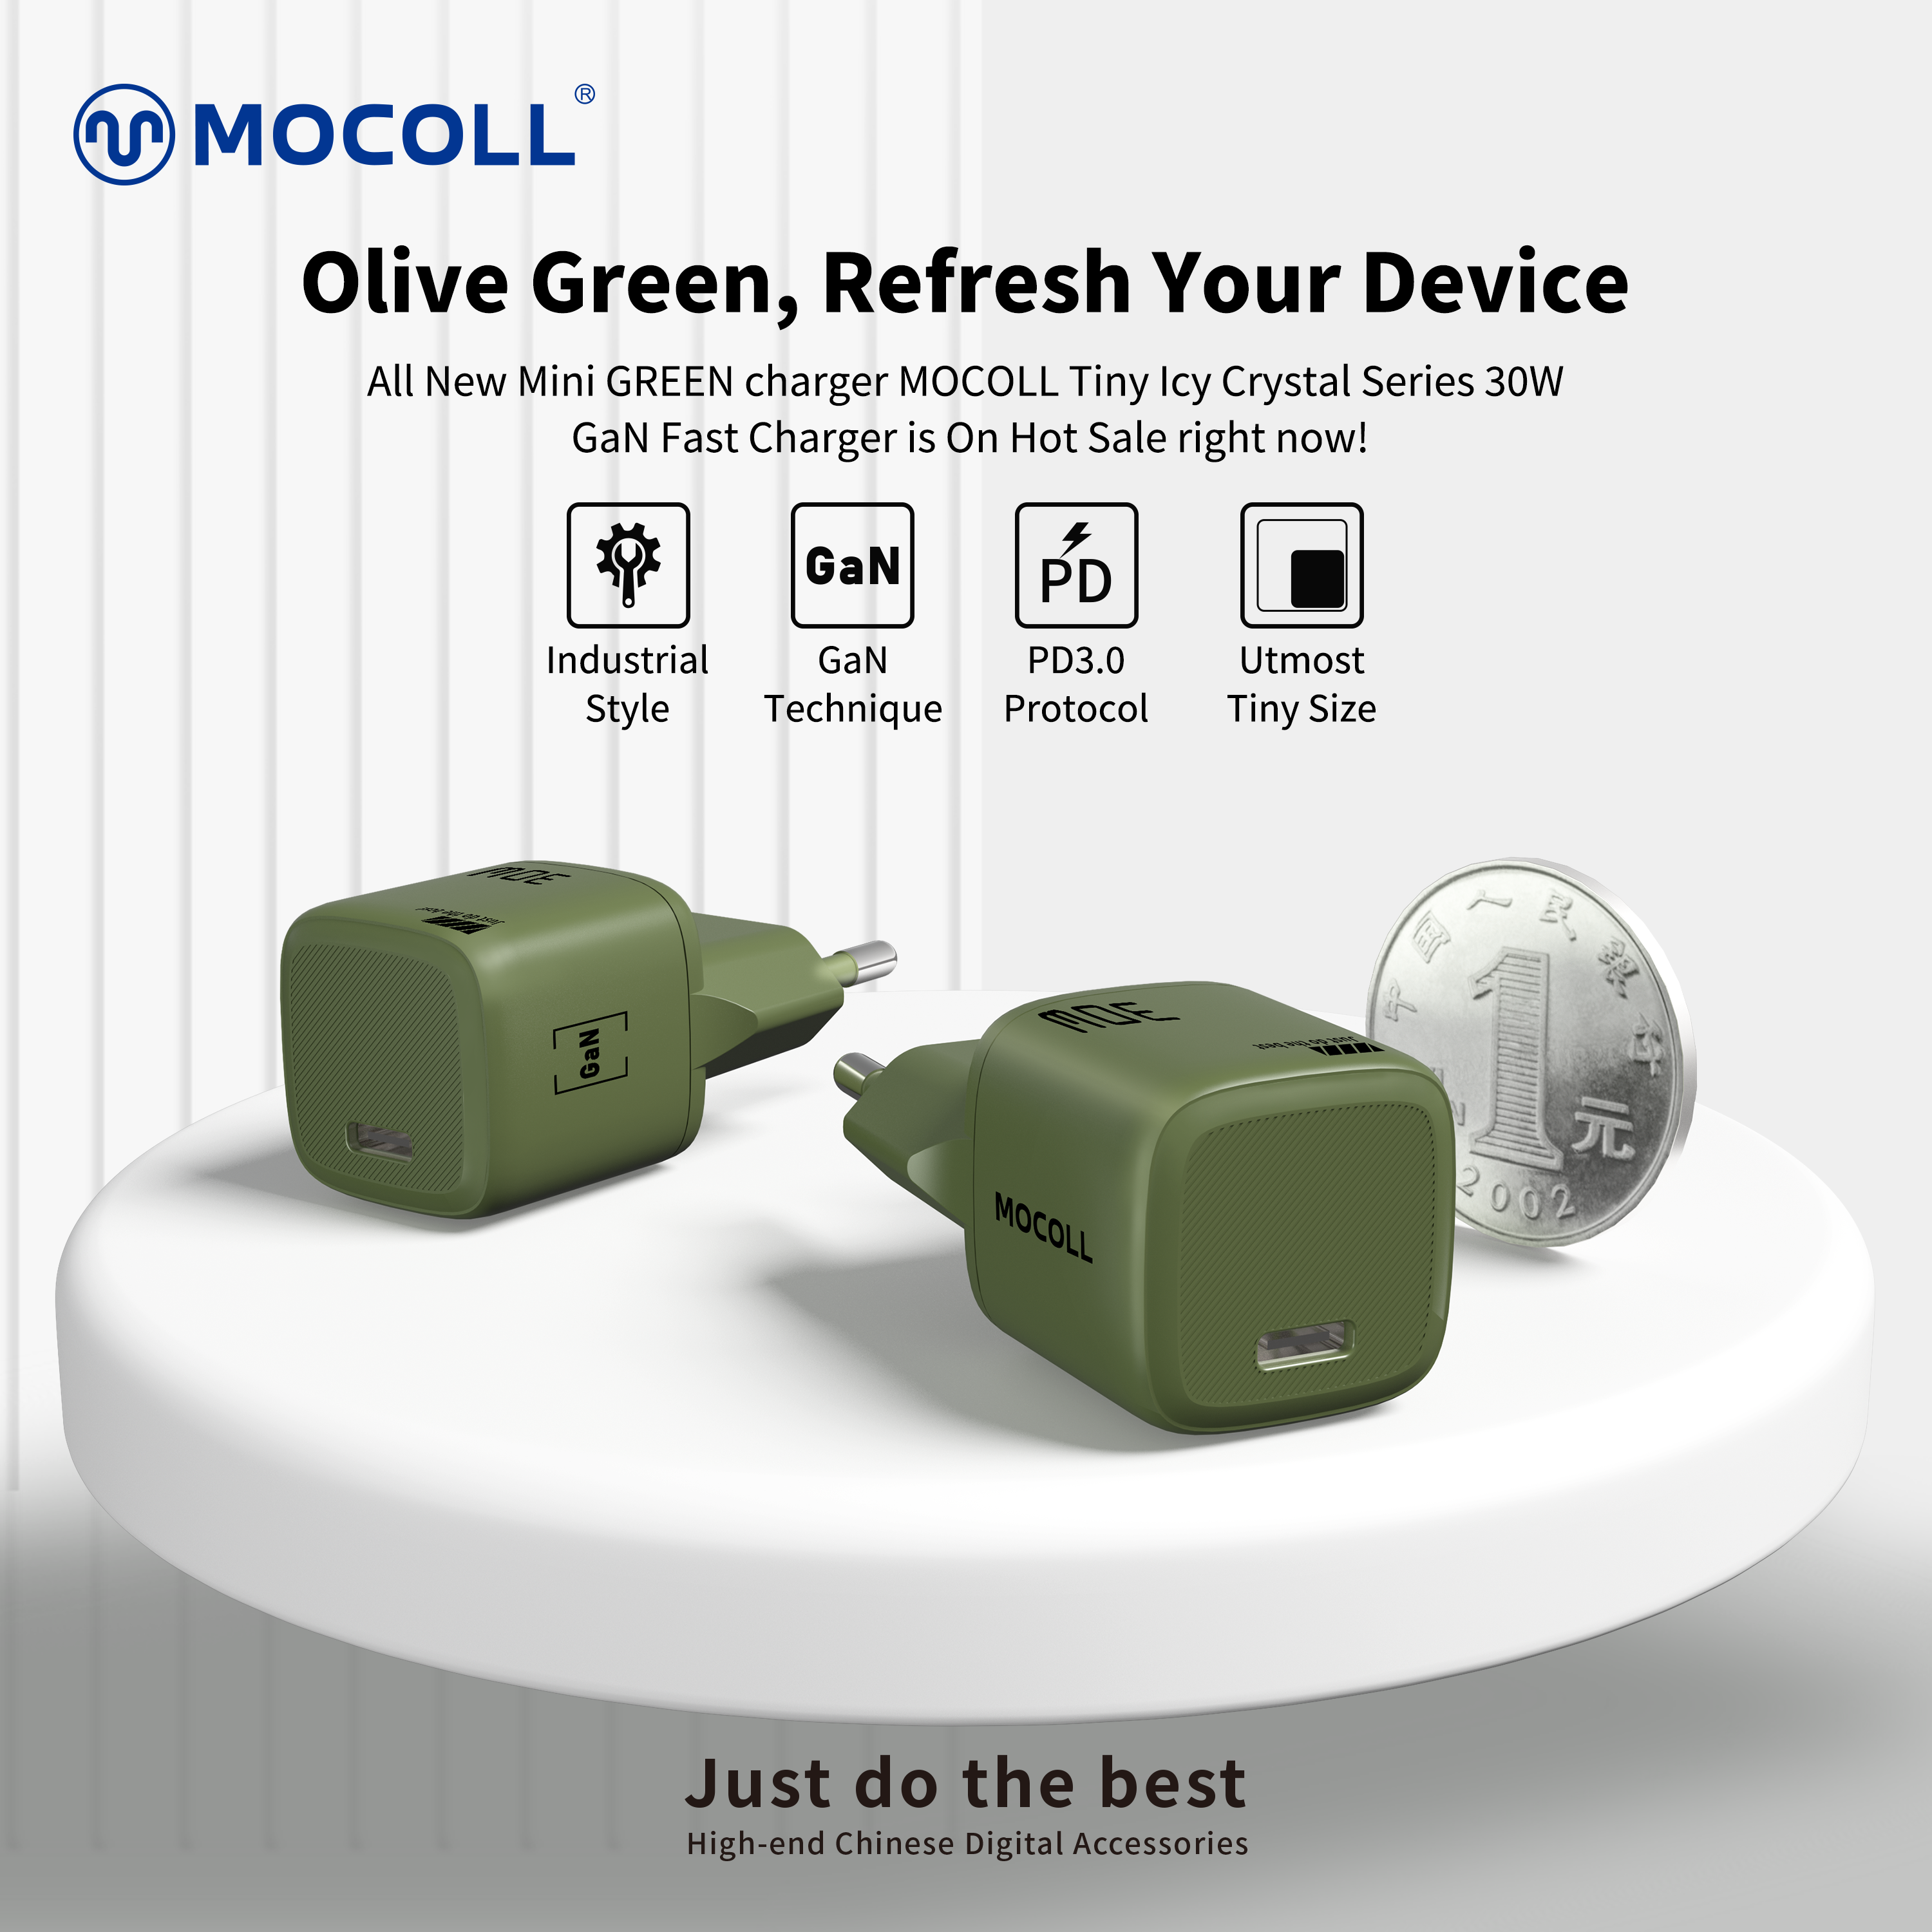 Al verde | Stile industriale, nuovo caricabatterie rapido GaN da 30 W verde oliva MOCOLL